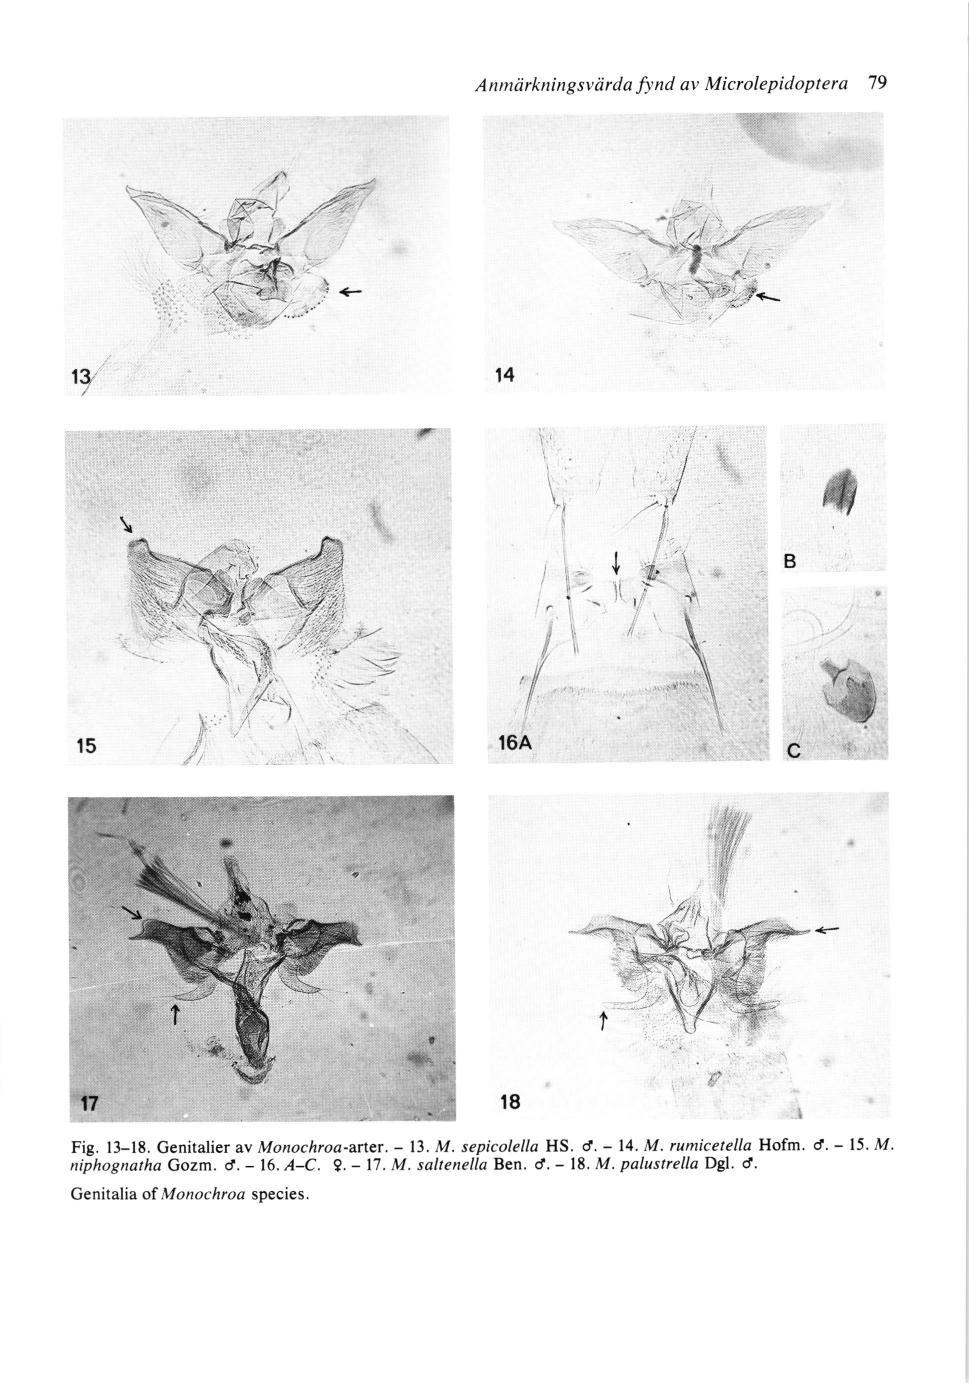 Anmiirkningsvrirda fynd av Microlepidoptera 79 Fig. 13-18. Genitalier av Monochroa-arter. - 13. M. sepicolel/a HS. d. - 14. M. rumicetella Hofm.